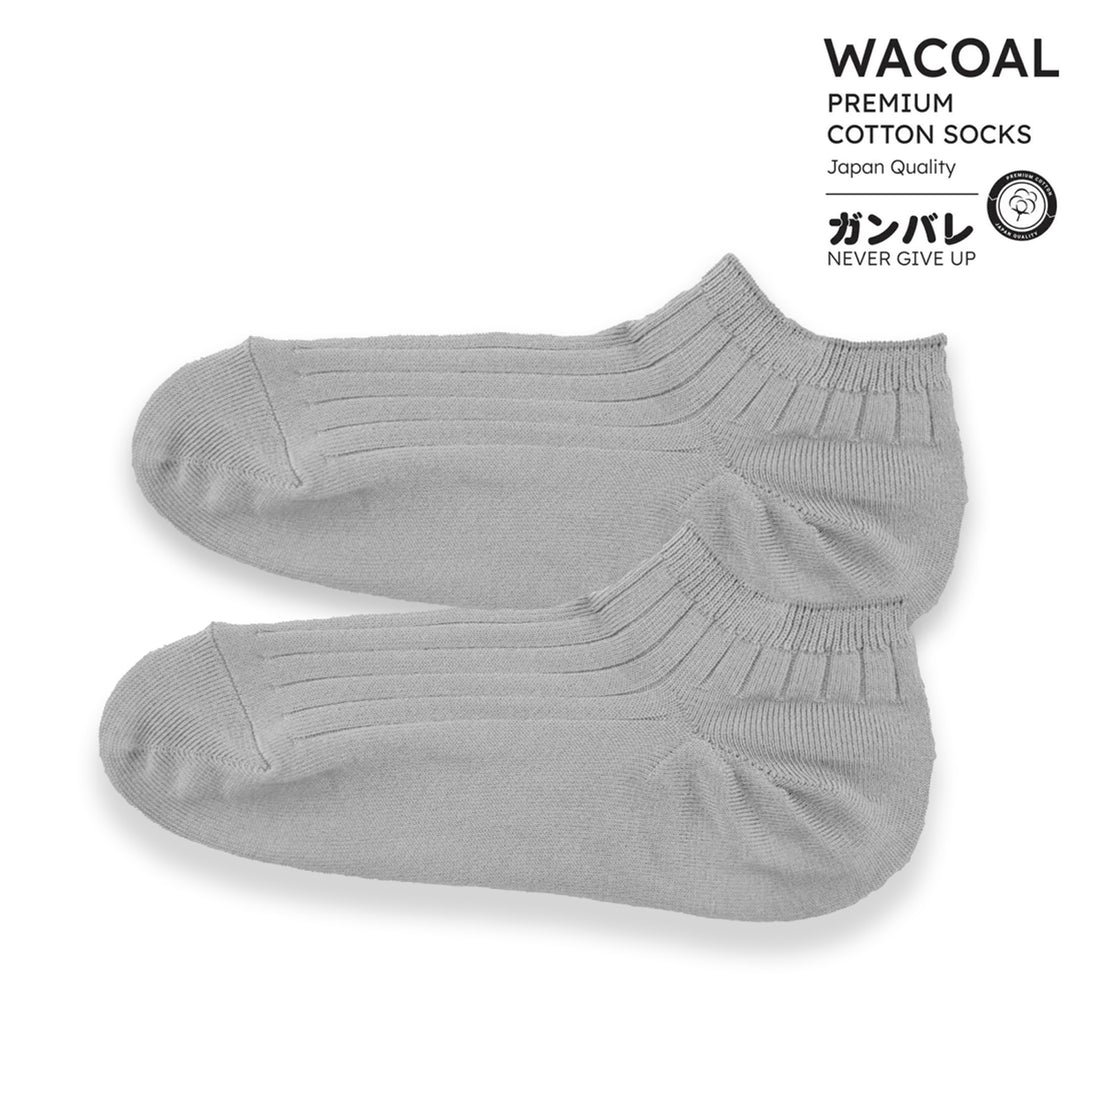 Cotton Socks Anti-bacteria, model WW1106, gray (GY)